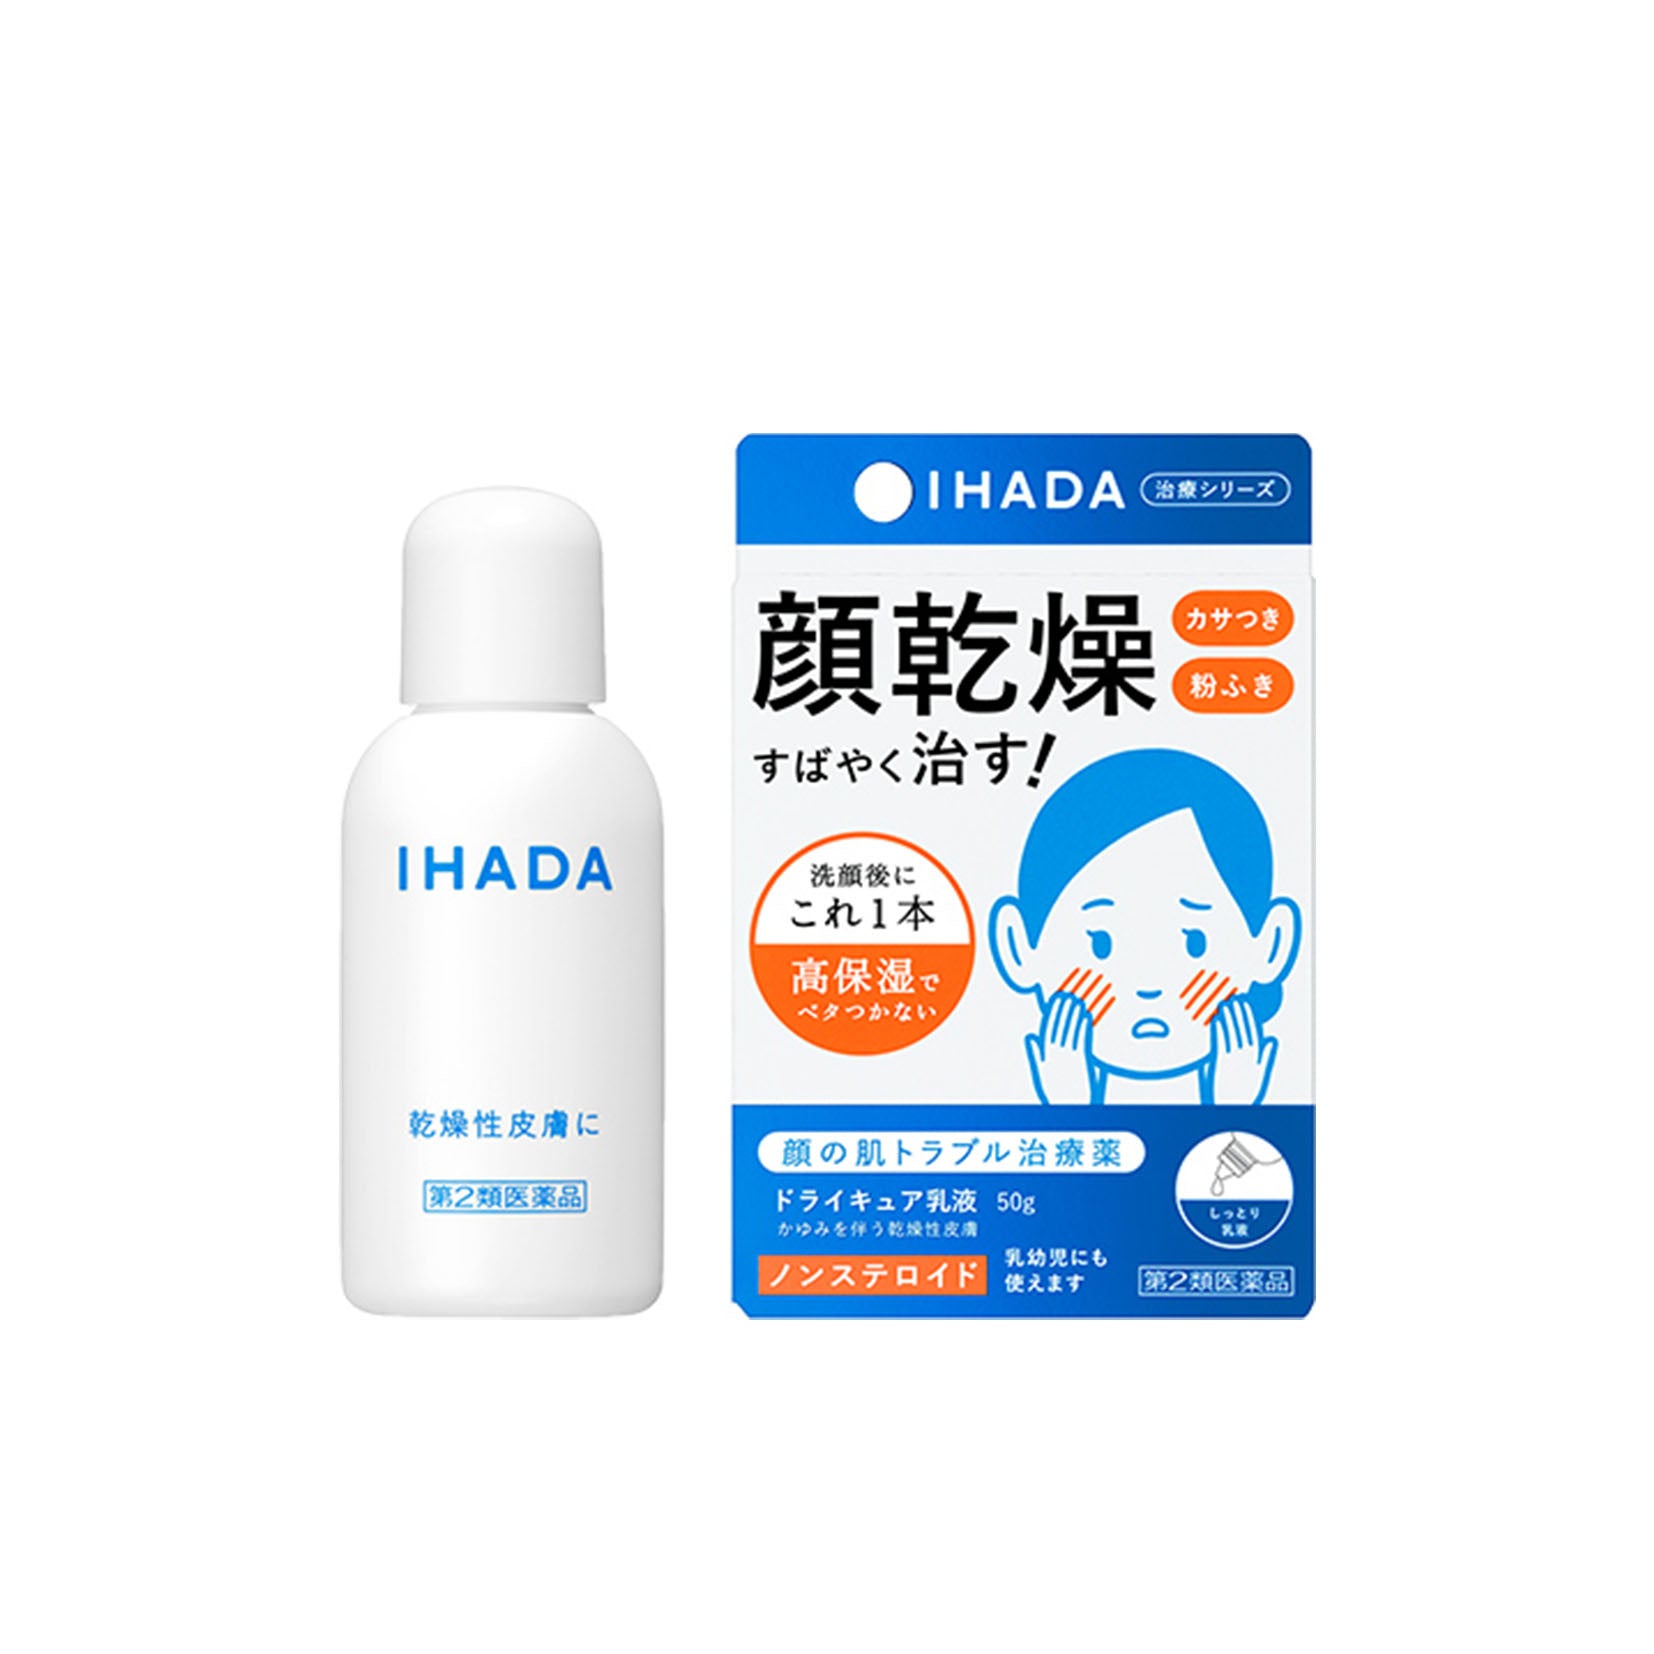 Shiseido IHADA Medicinal Dry Cure Emulsion 50g - Harajuku Culture Japan - Japanease Products Store Beauty and Stationery